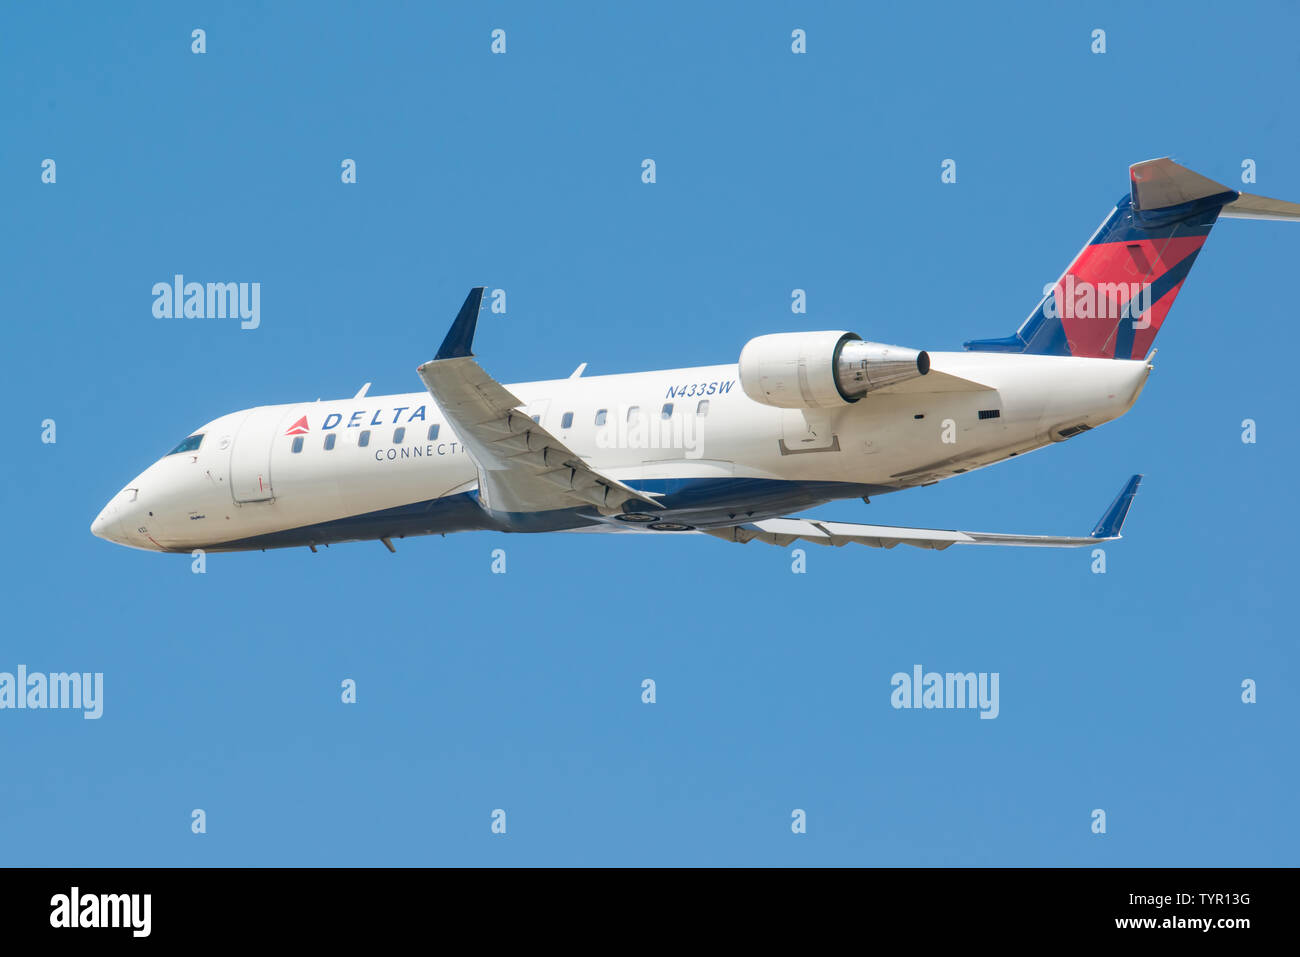 MINNEAPOLIS, Minnesota/USA - 25. JUNI 2019: Nahaufnahme von Flugzeug Flugzeug Abflüge weg von der MSP-Minneapolis/St. Paul Airport Stockfoto